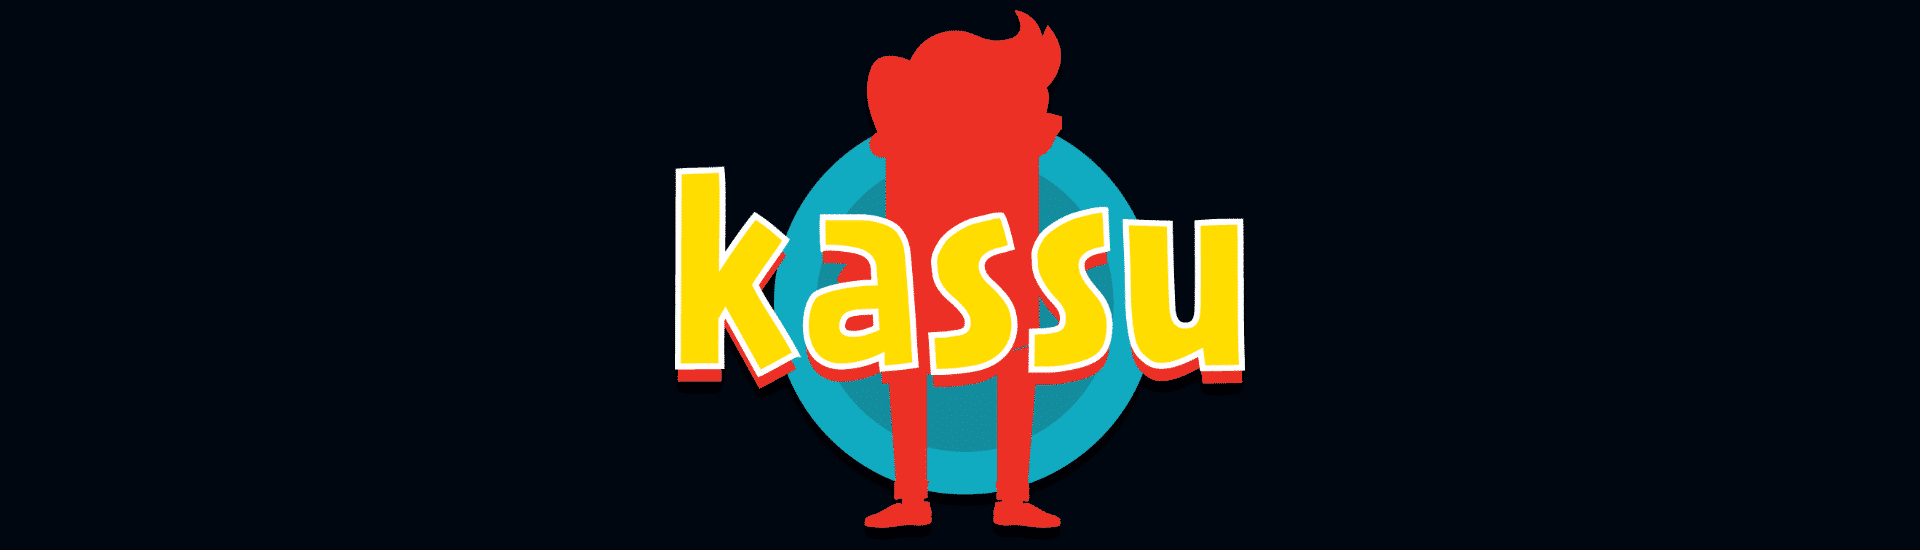 Kassu Featured Image